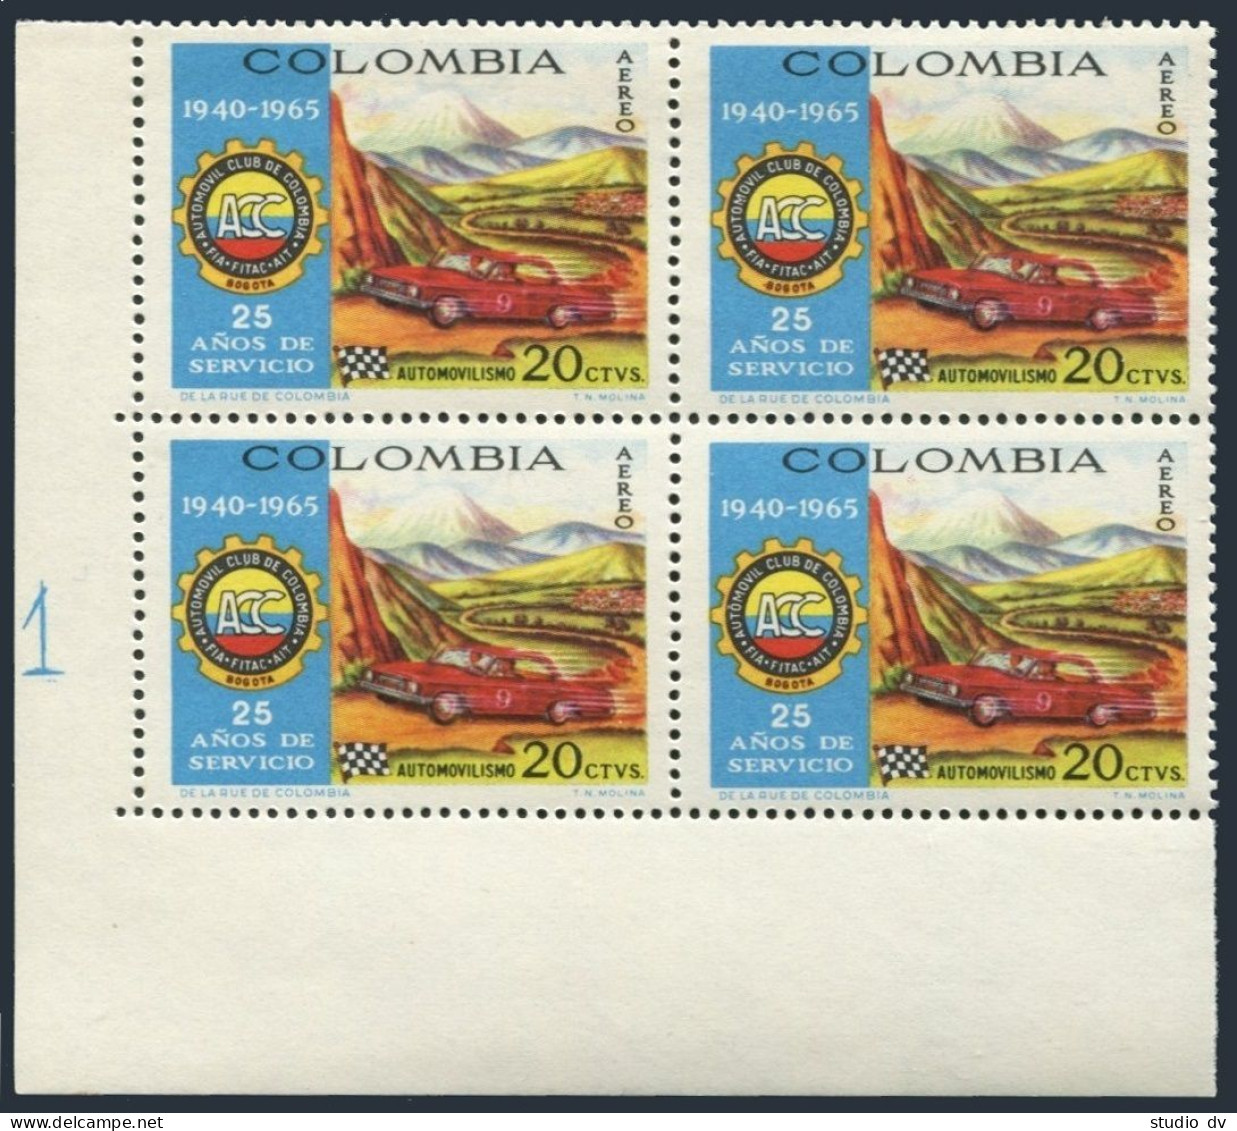 Colombia C480 Block/4,MNH.Michel 1068. Automobile Club Of Colombia,25,1966. - Kolumbien